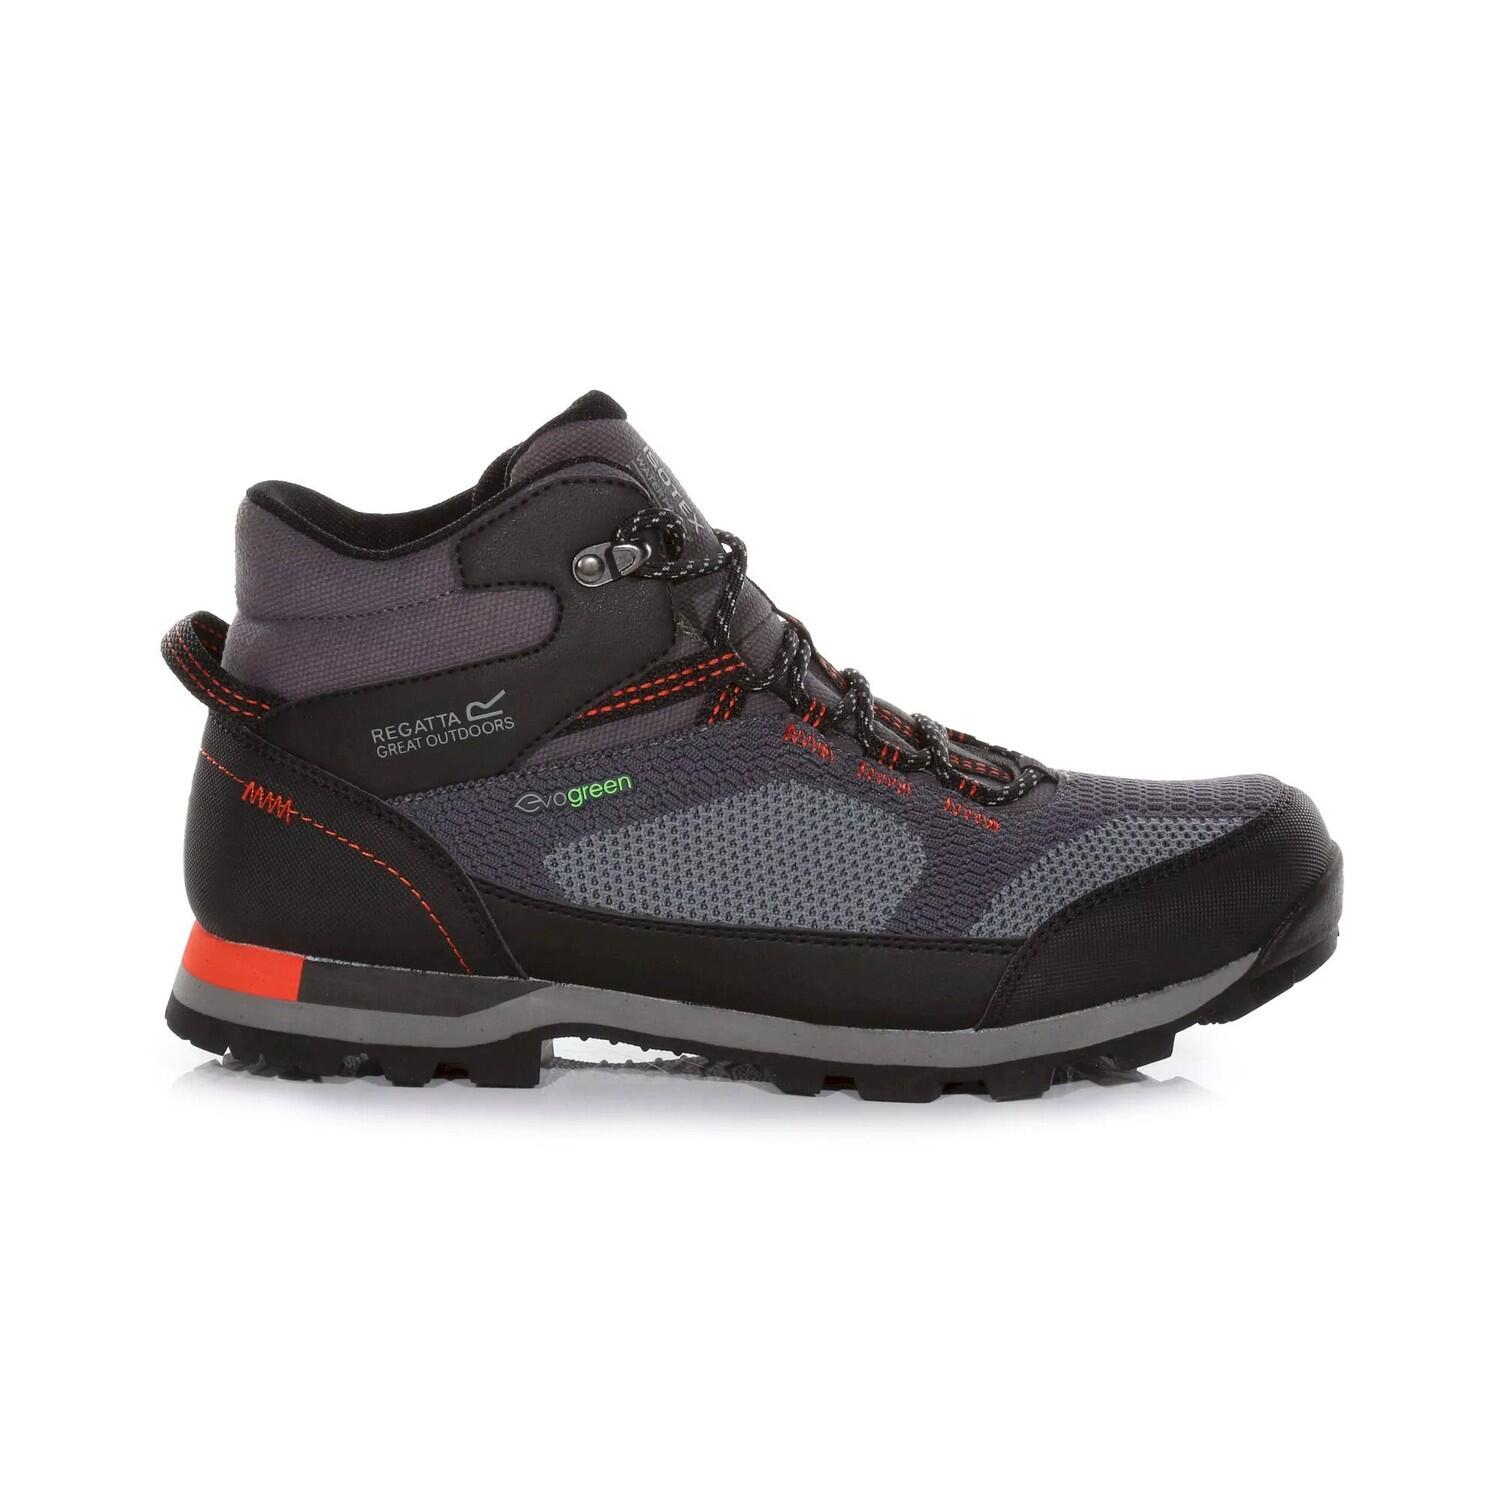 Mens Blackthorn Evo Walking Boots (Dark Grey/Rusty Orange) 2/5